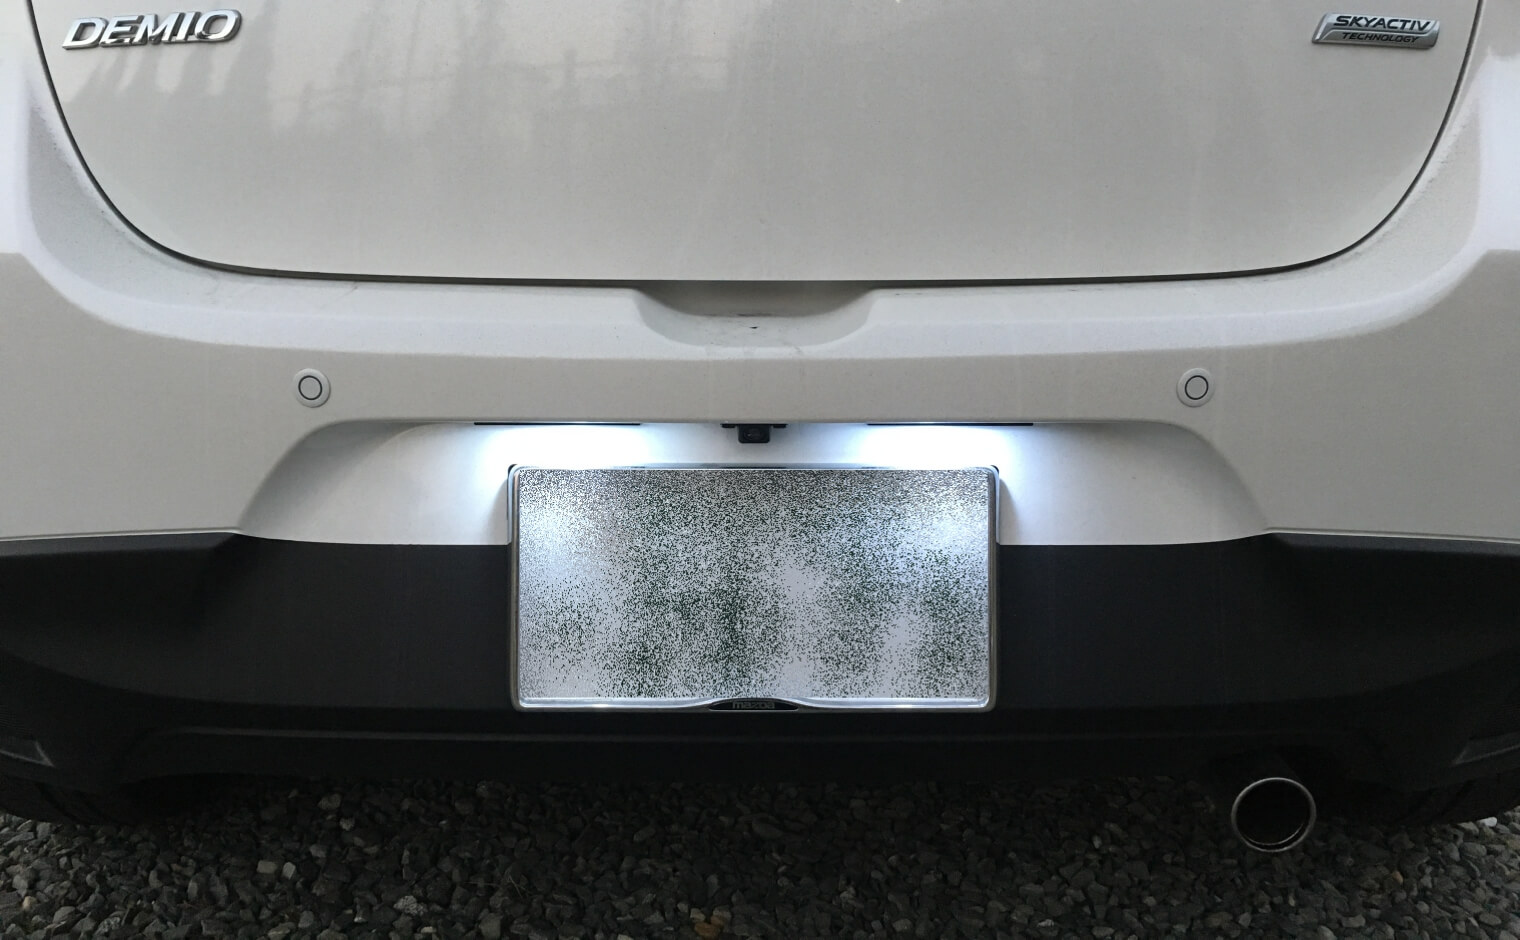 LEDが綺麗! DJデミオのナンバー灯の交換方法を解説します! | 車情報サイト『くるなぞ』